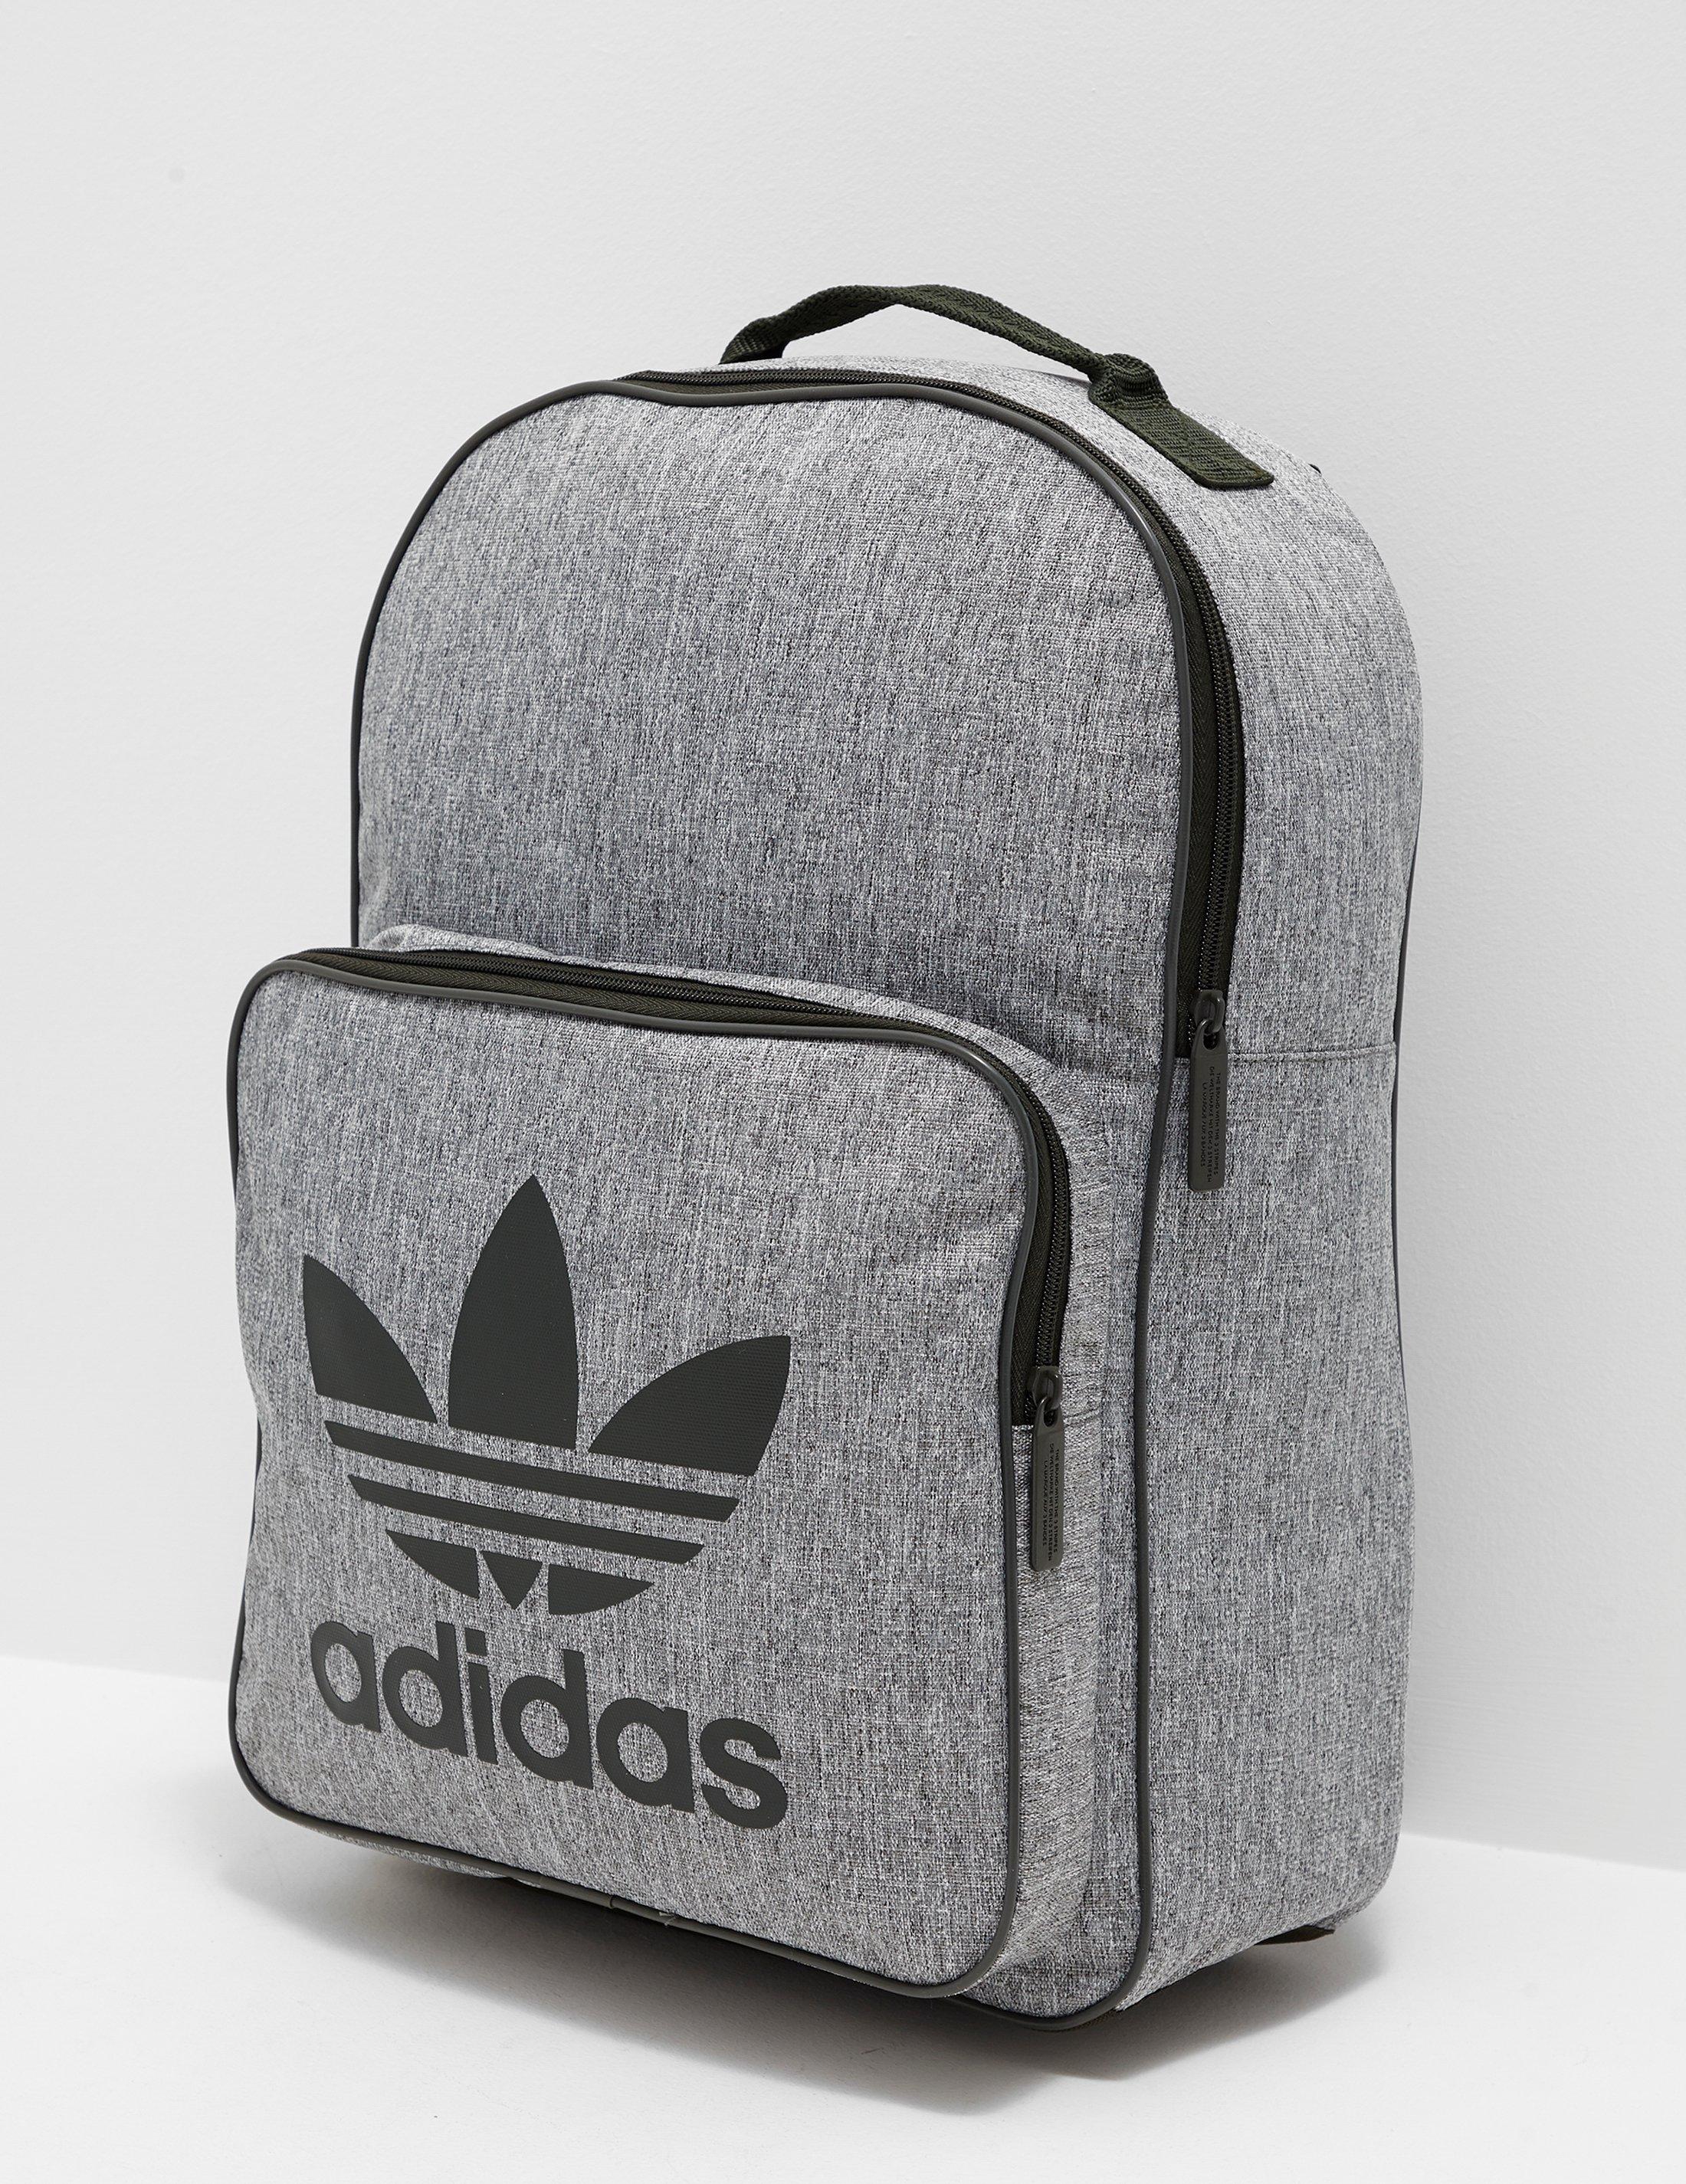 grey adidas bookbag